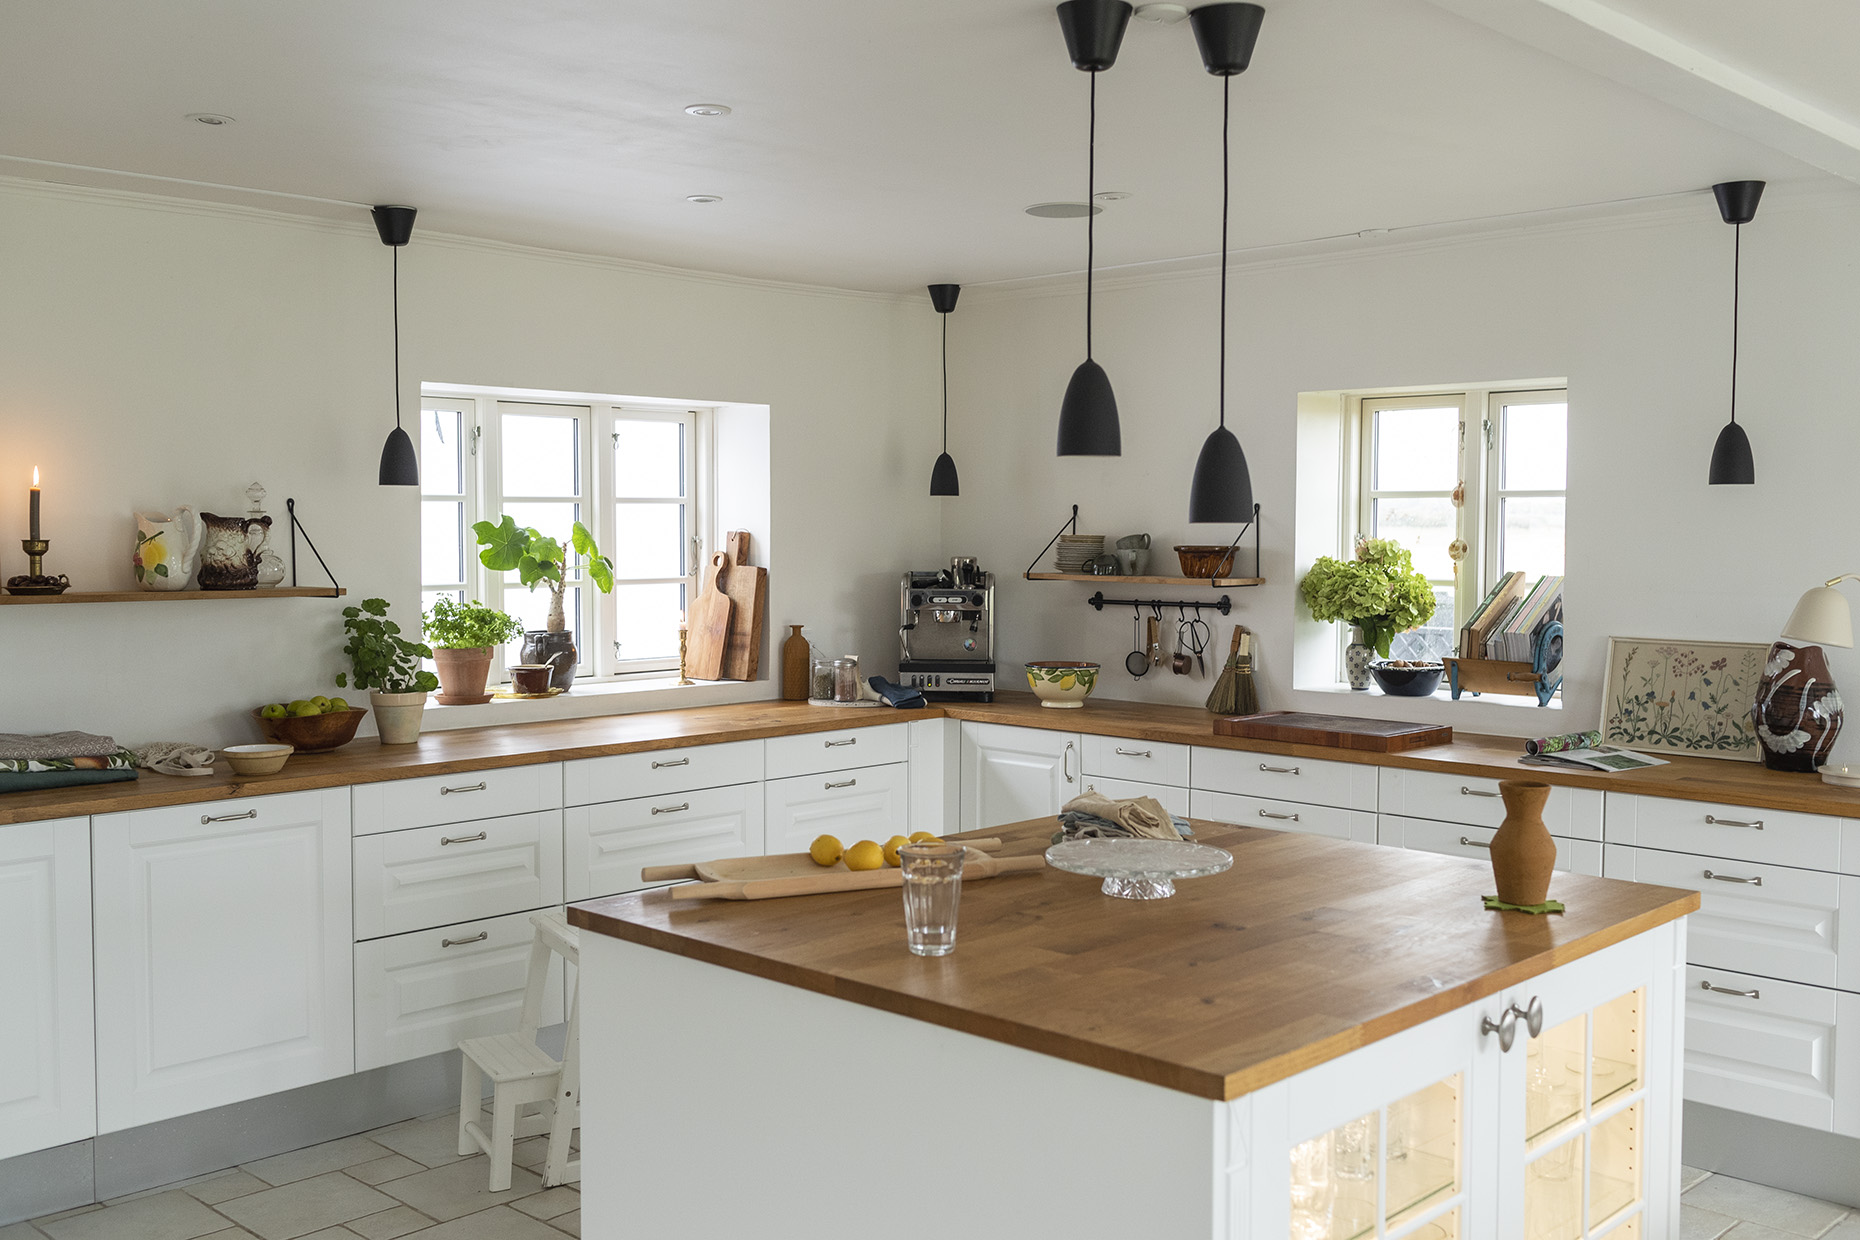 Forvirrede Staple fotoelektrisk Køkkenbelysning • Inspiration til belysning i køkkenet | Designa